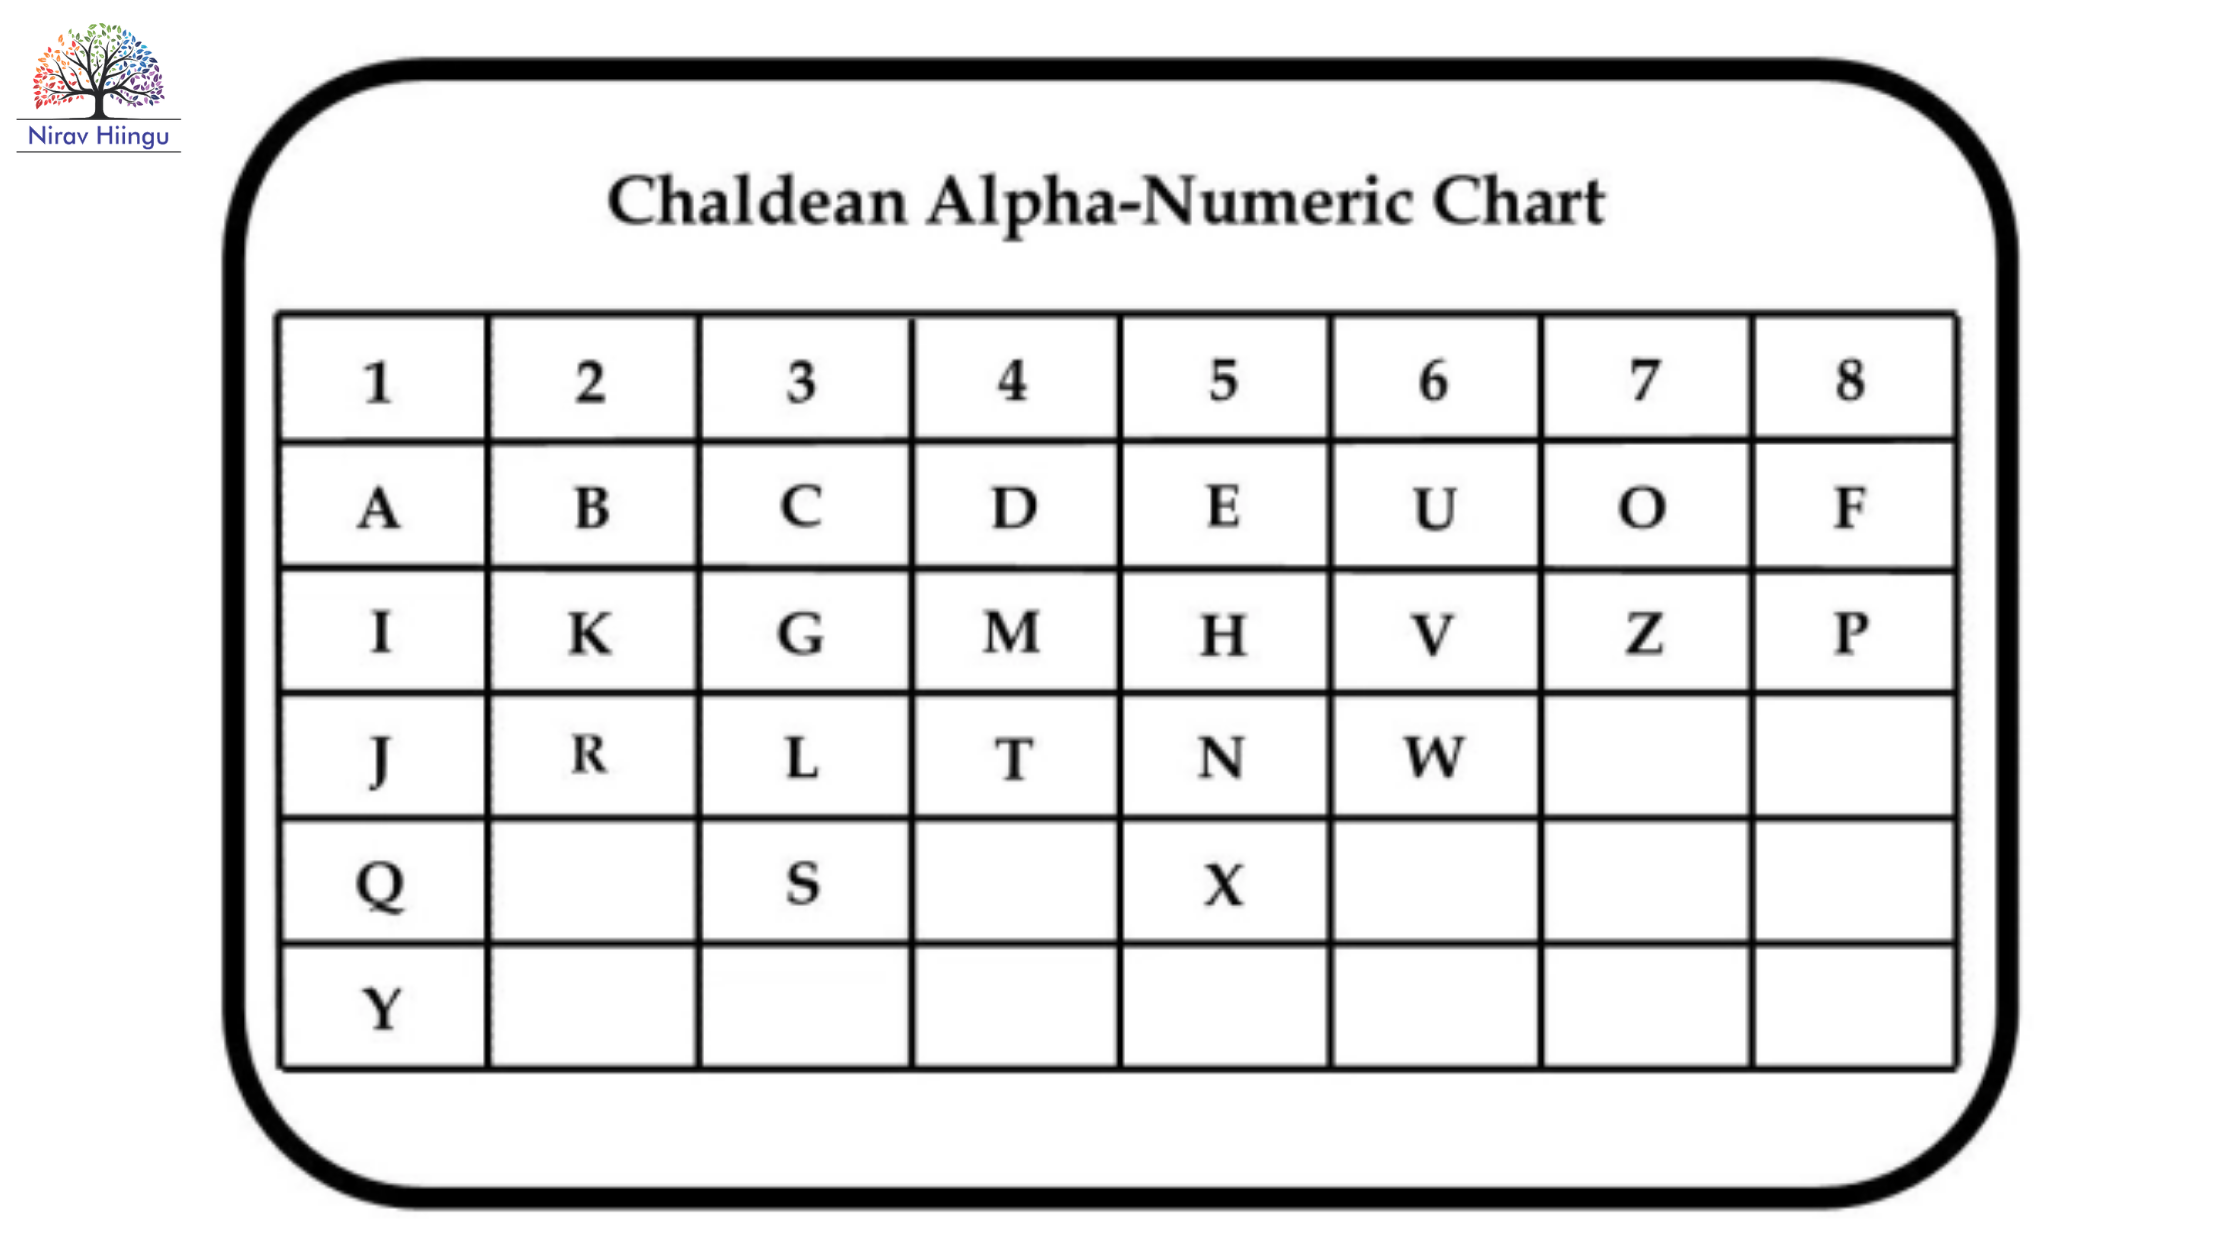 Chaldean Numerology